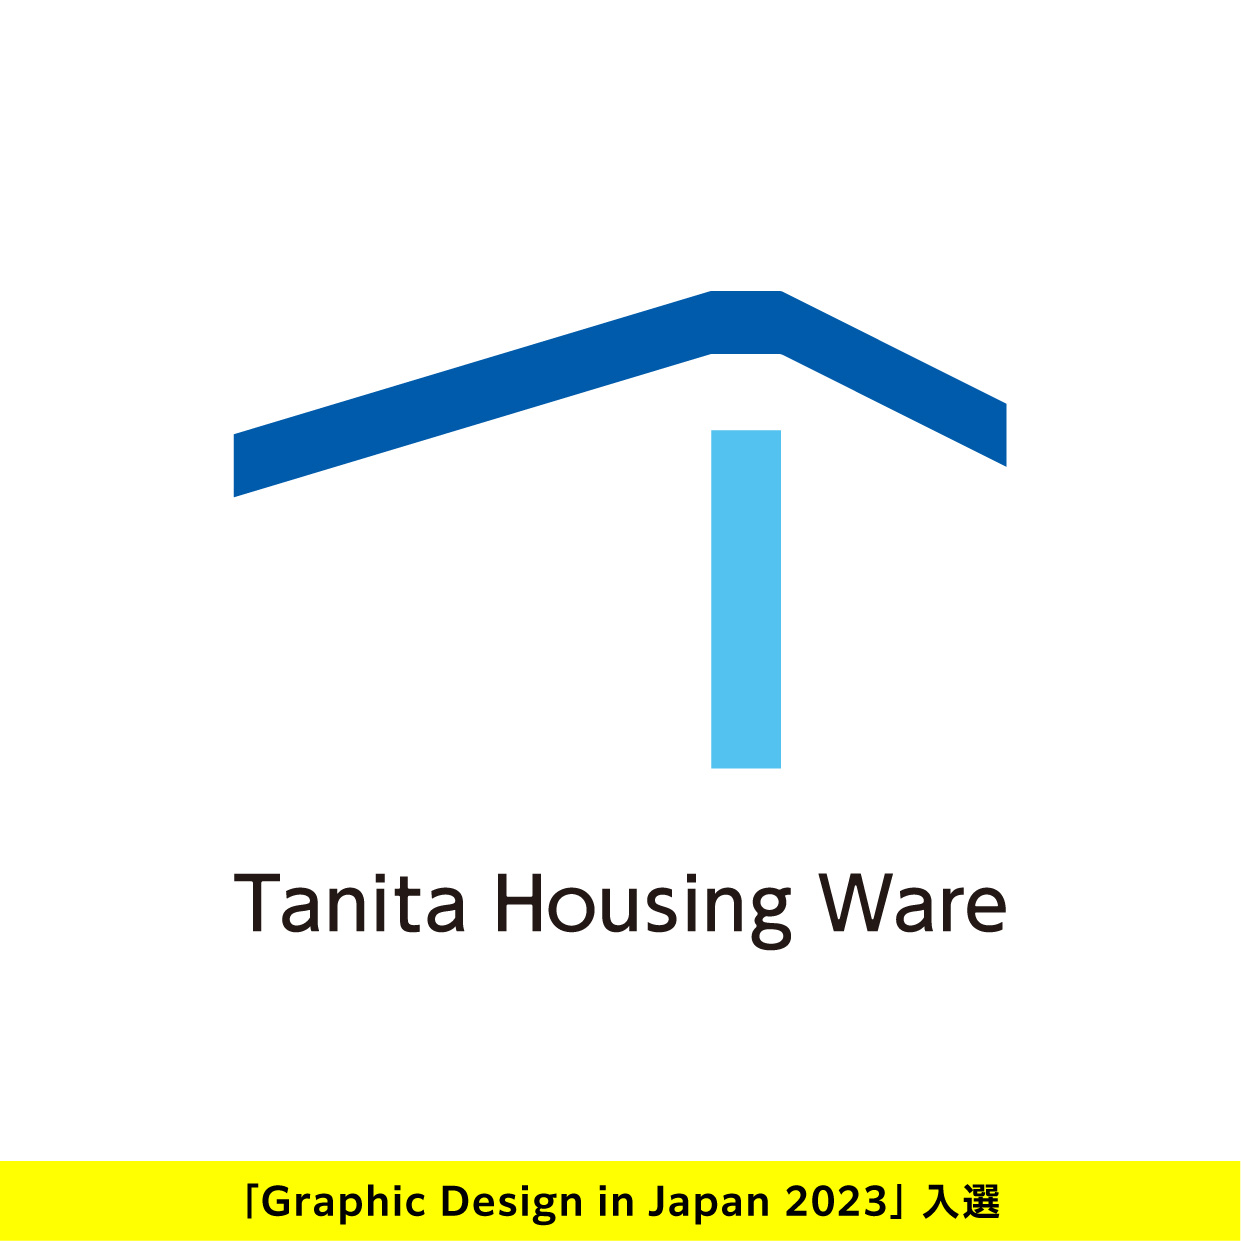 Graphic Design in Japan 2023」入選 - MARKLE DESIGN